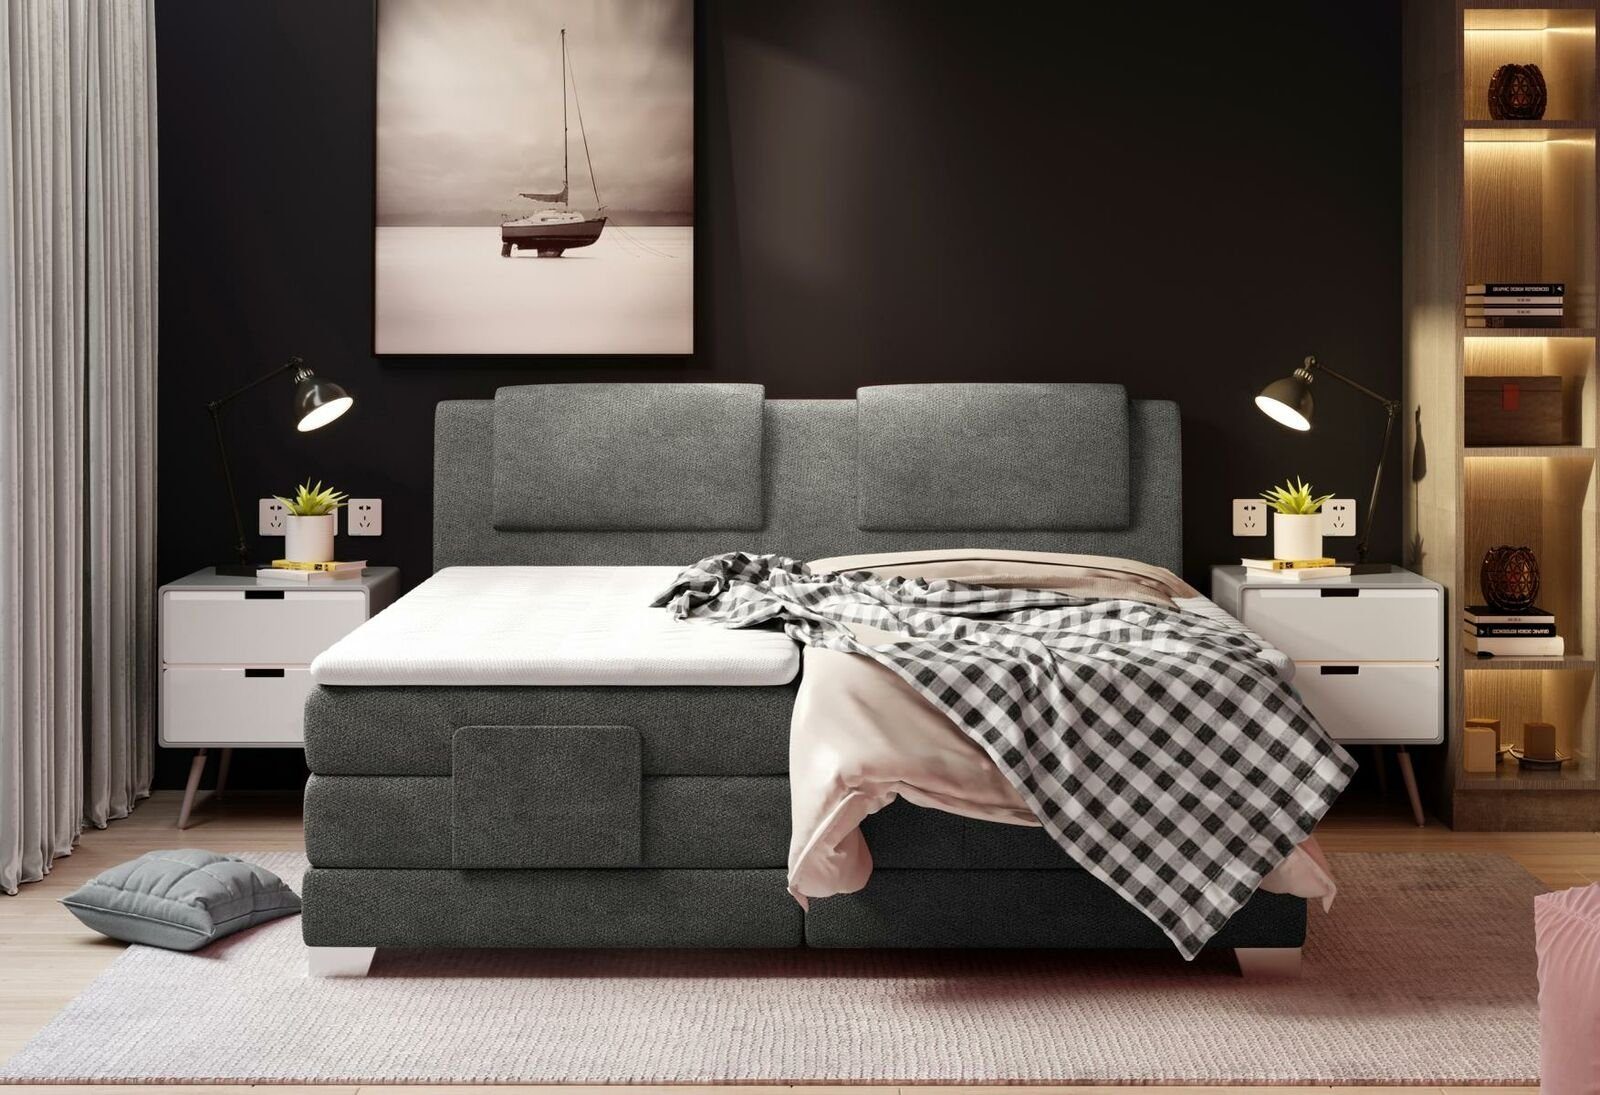 Design Hotel Bett, Doppel Luxus Textil Matratze Bett Boxspring Betten JVmoebel Ehe